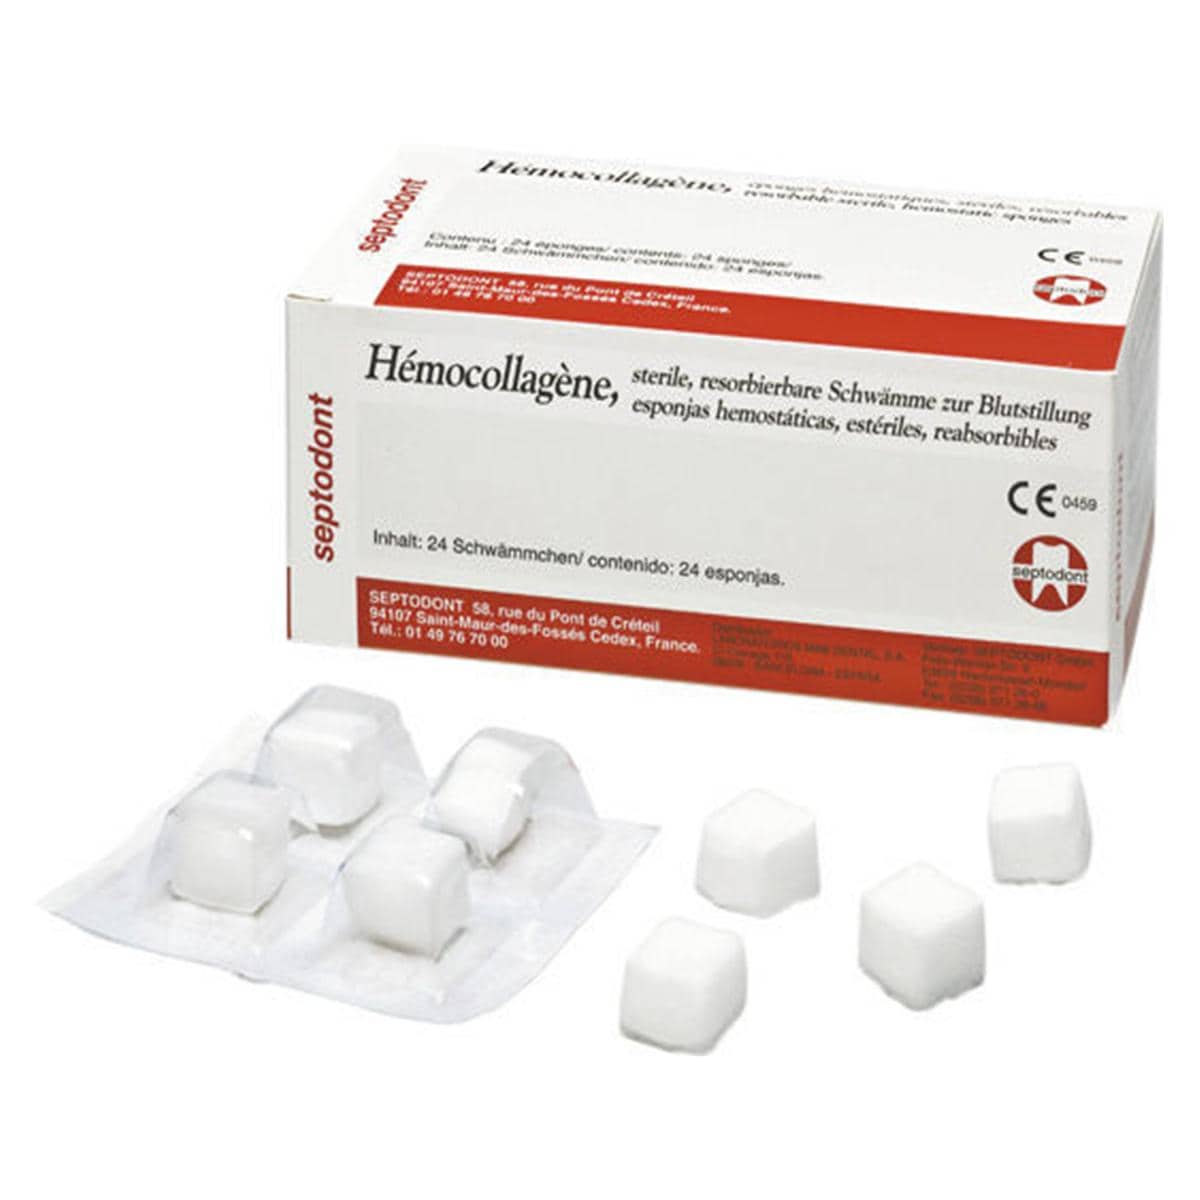 Hemocollagene - Verpakking, 24 stuks